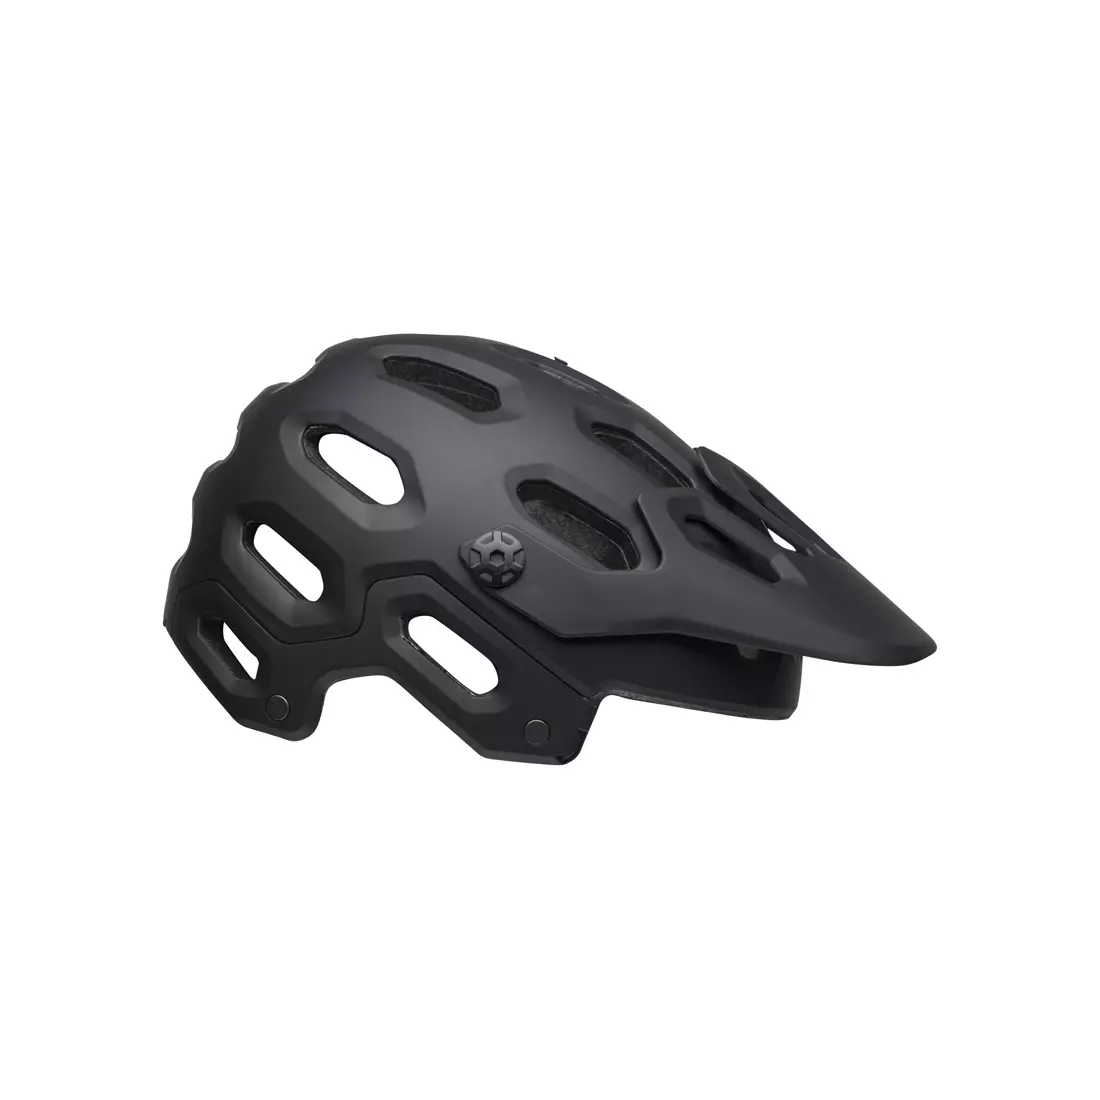 BELL SUPER 3 Bicycle helmet mtb, matte gloss black gray 